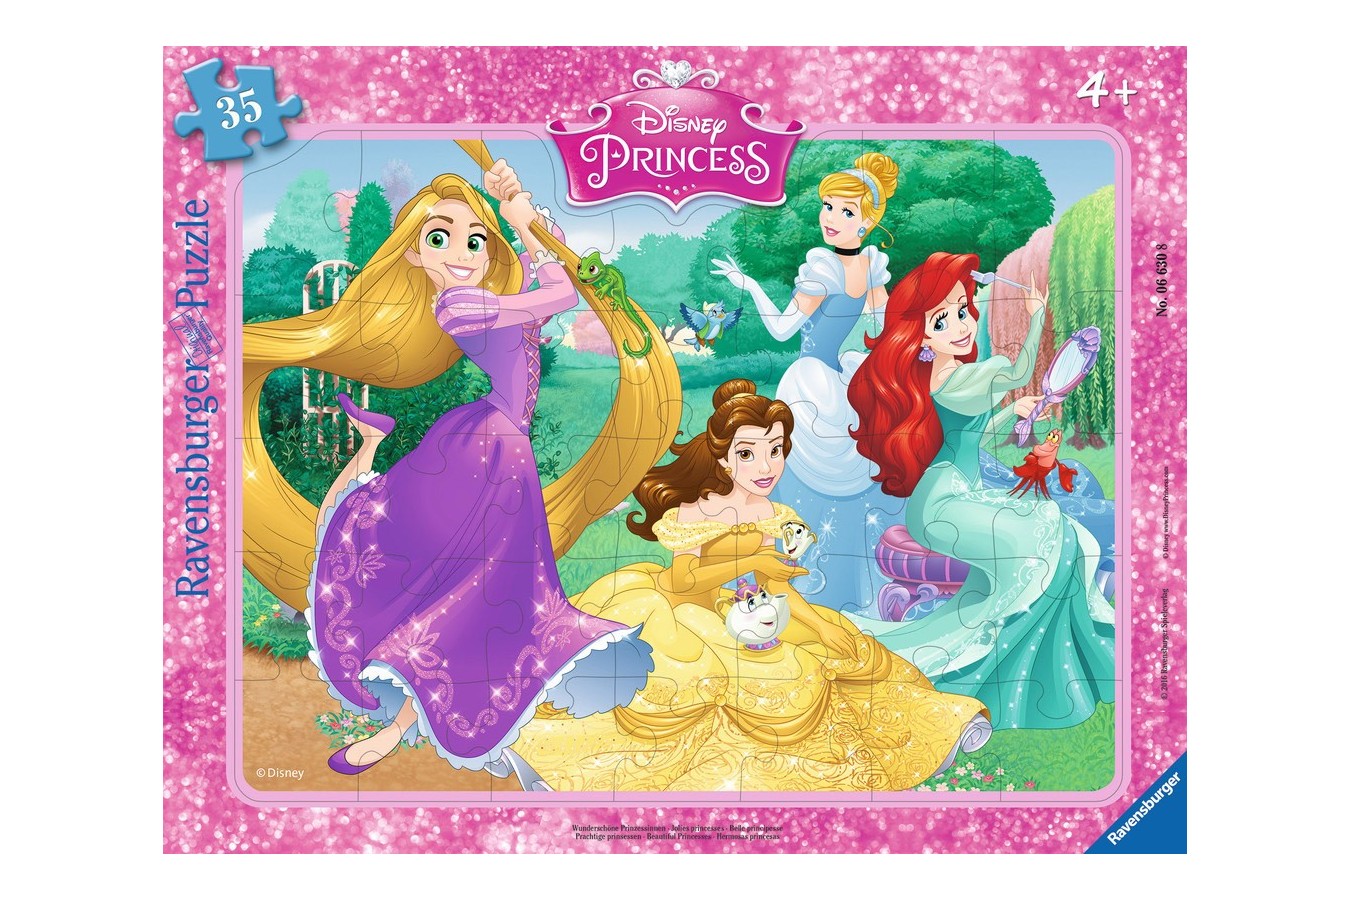 Puzzle Ravensburger - Printesele Disney, 35 piese (06630)